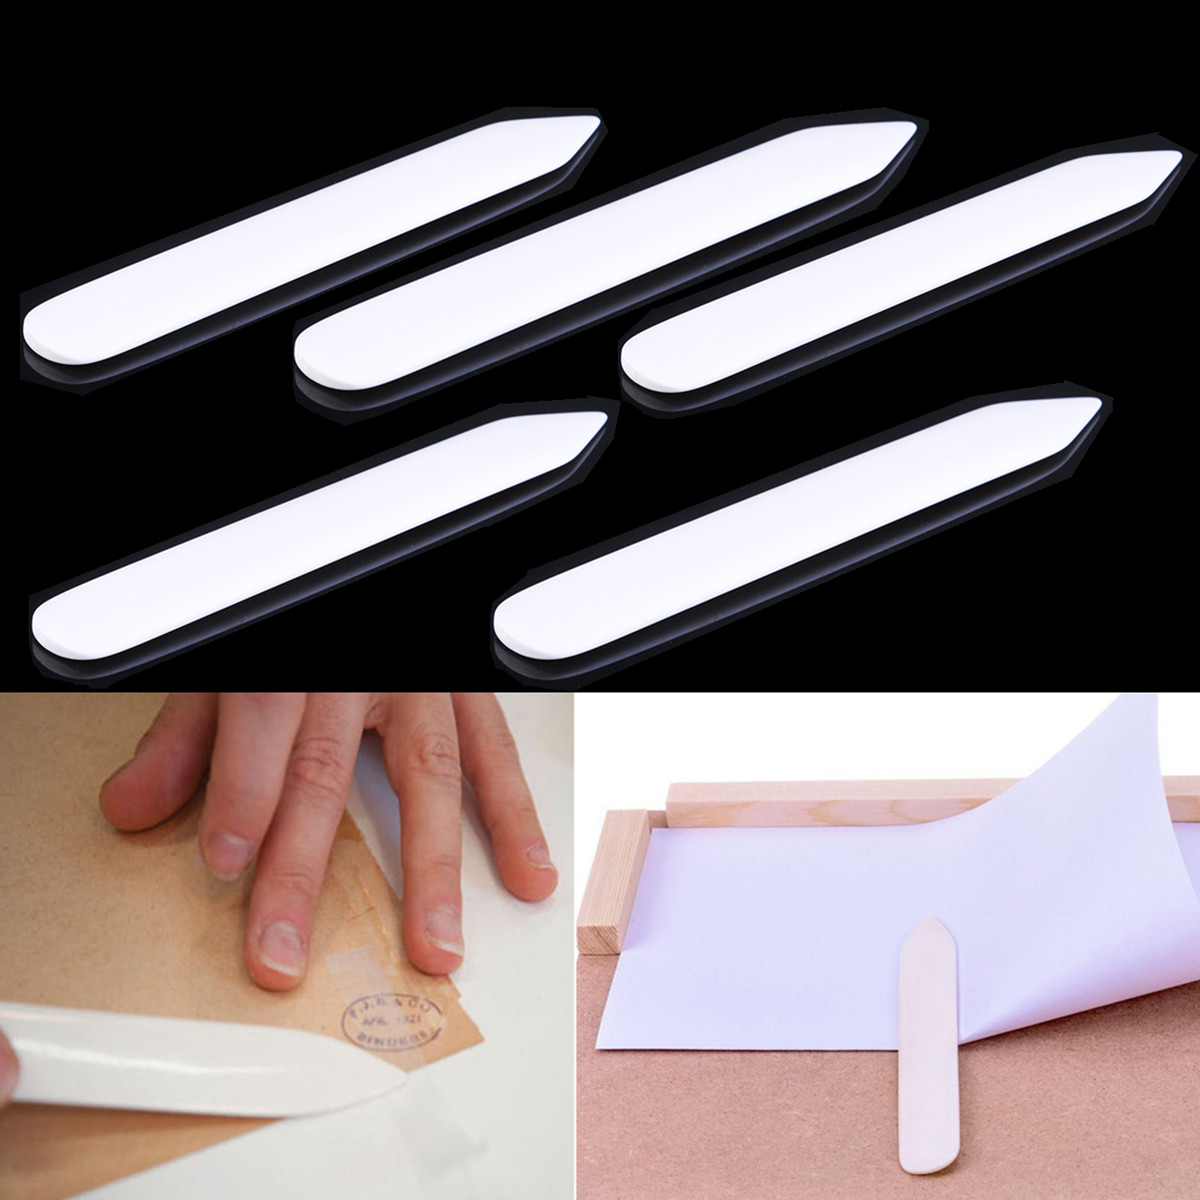 Natural-Bone-Folder-Artist-Tool-For-Scoring-Folding-Creasing-Paper-Leather-Craft-Tool-1632393-1